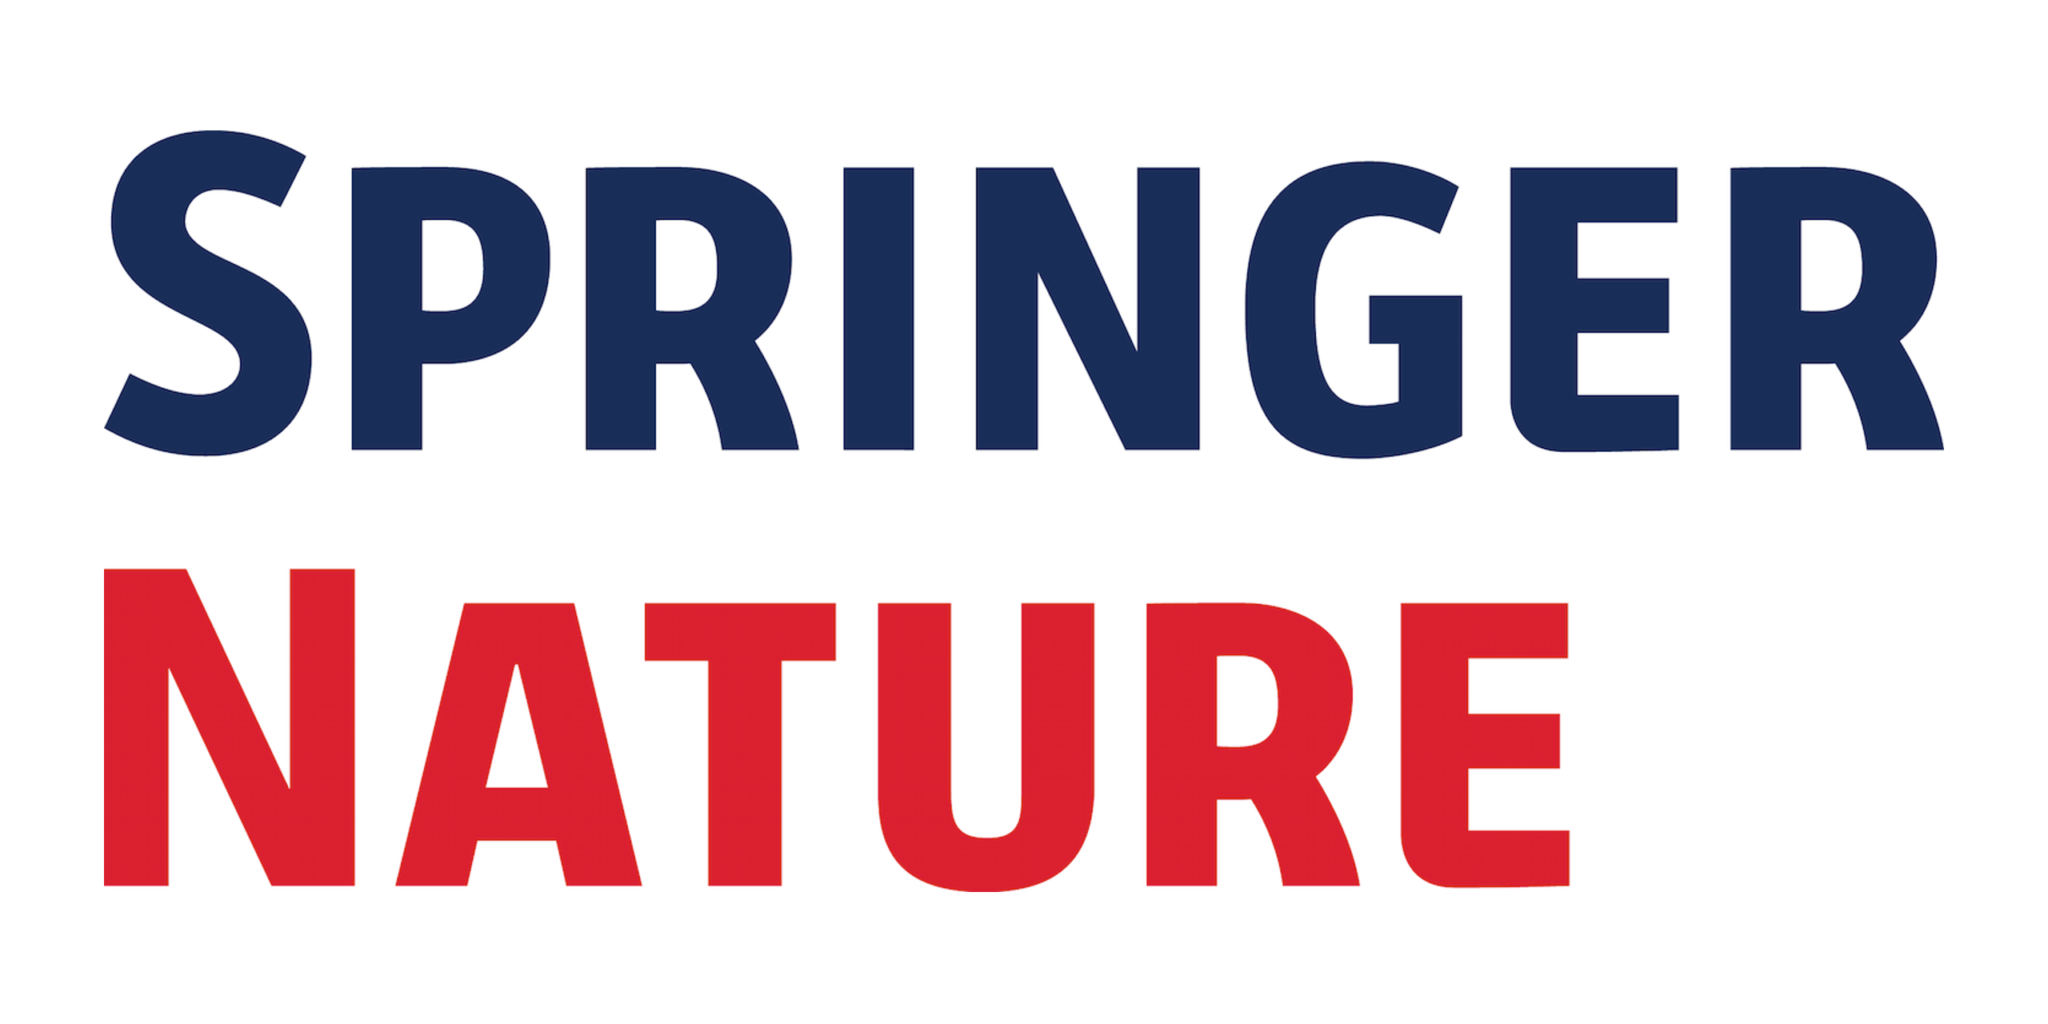 Издательство Springer. Springer лого. Springer nature. Springer nature logo. Https link springer com